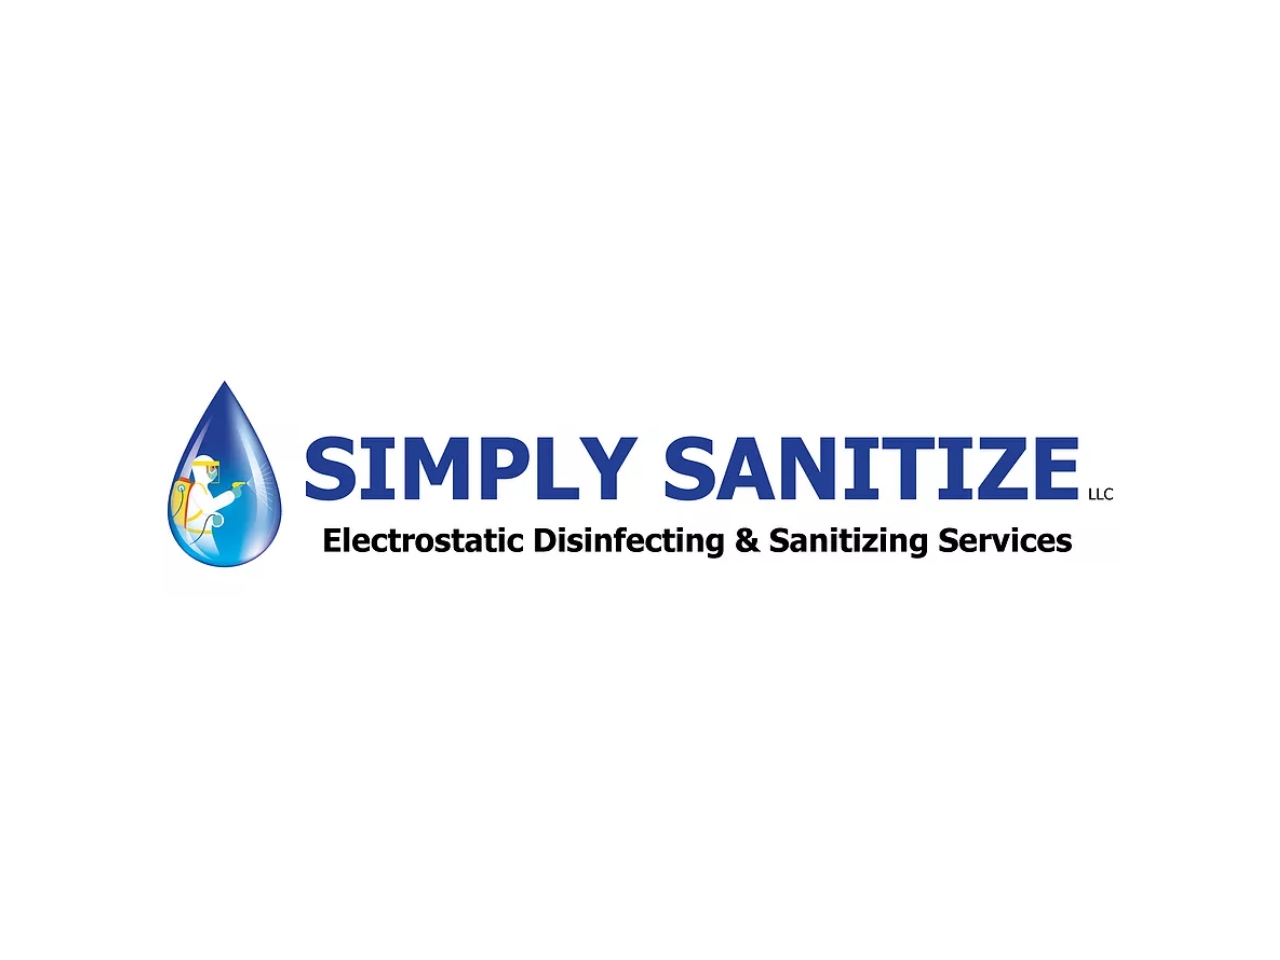 Simply Sanitize LLC